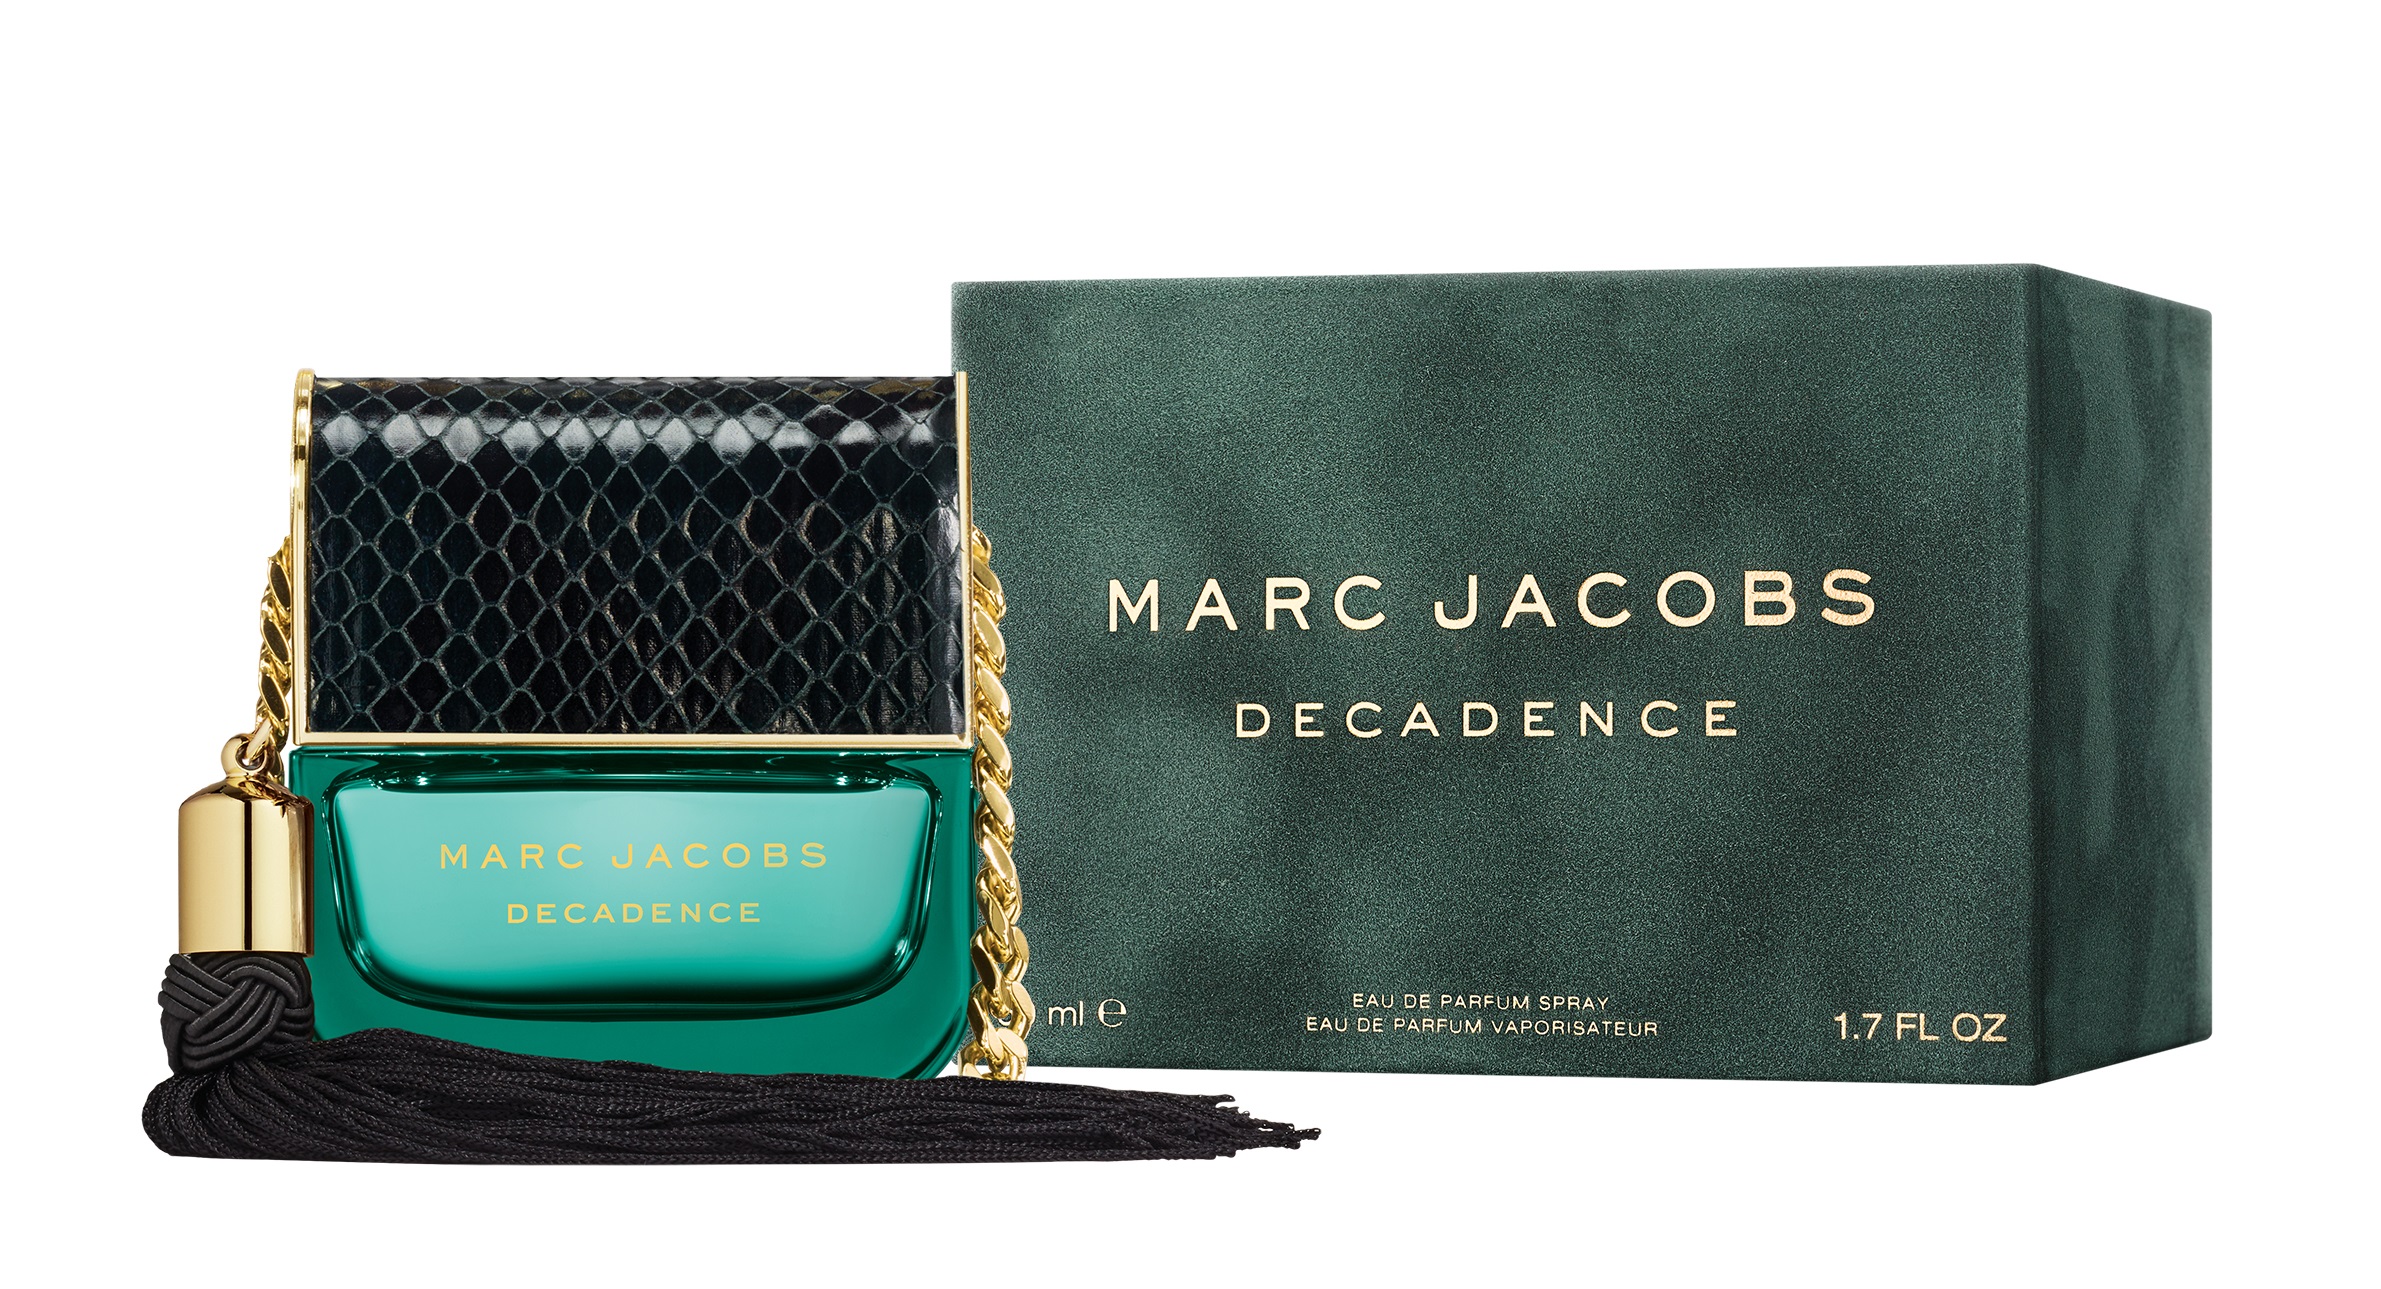 Marc jacobs decadence. Духи Marc Jacobs Decadence. Женская туалетная вода Marc Jacobs Decadence. Marc Jacobs Divine Decadence 1,5 ml.